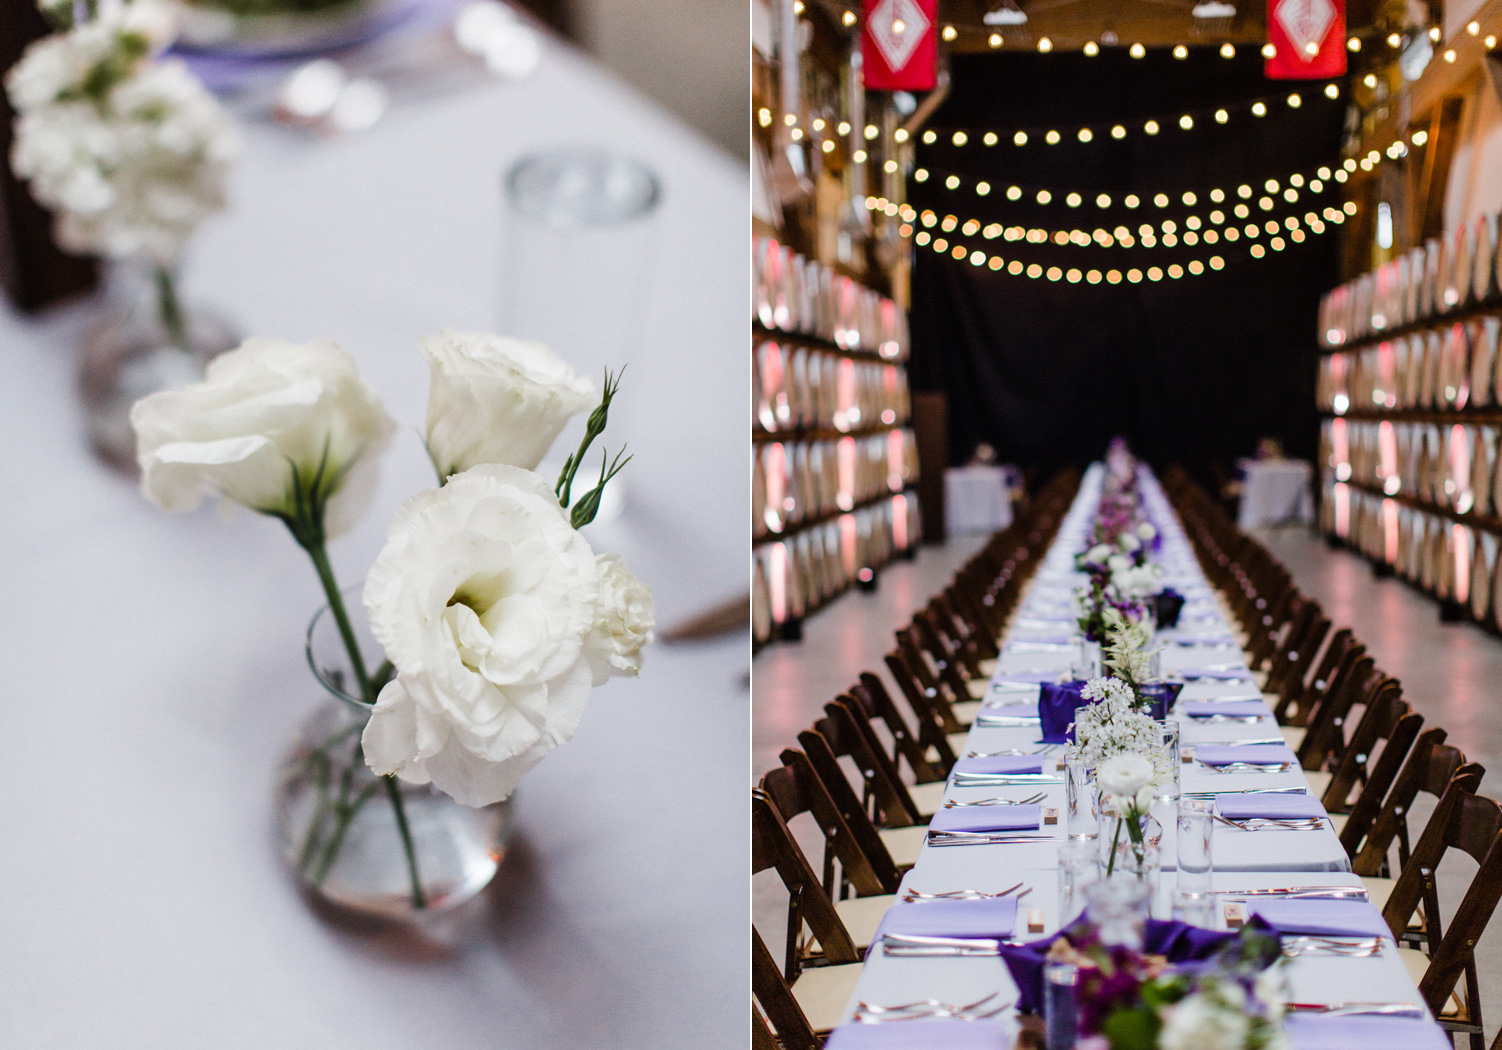 Long Farm Style Reception Table at Westland Distillery Seattle Wedding Venue by Alexandra Knight Photography